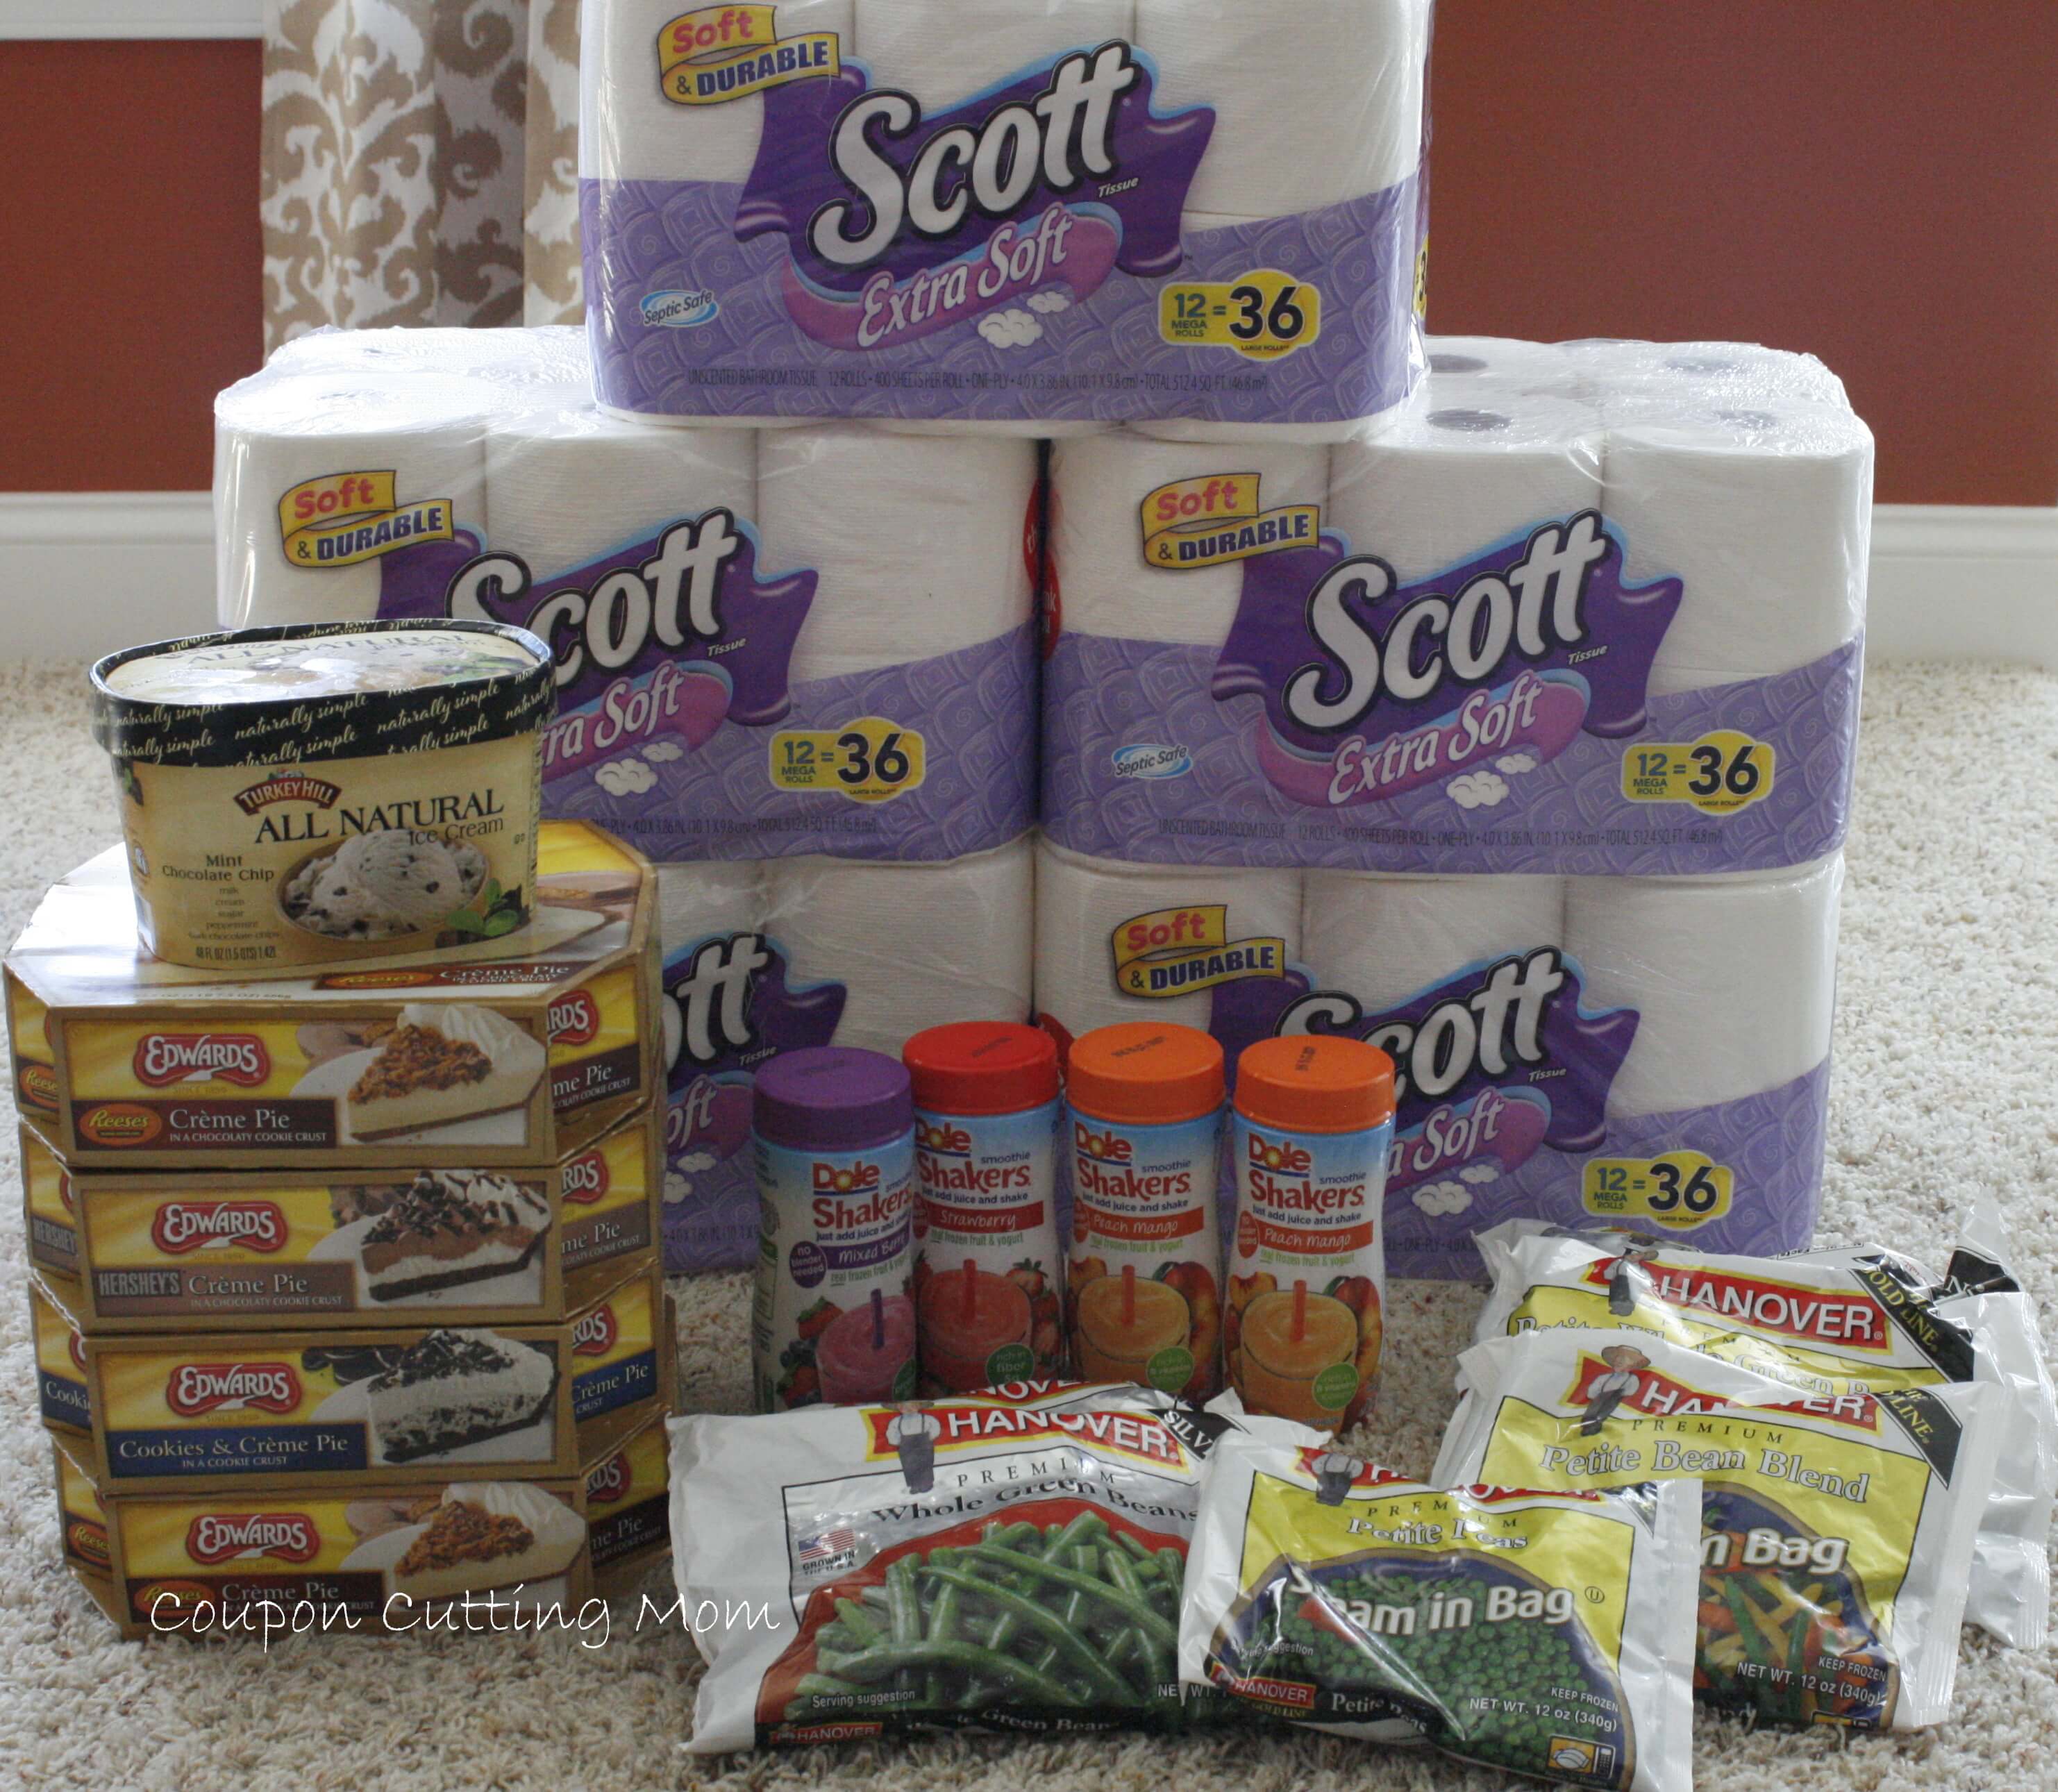 Giant Shopping Trip: 84% Savings on Scott Bath Tissue, Edwards Creme Pies, Frozen Veggies and More 